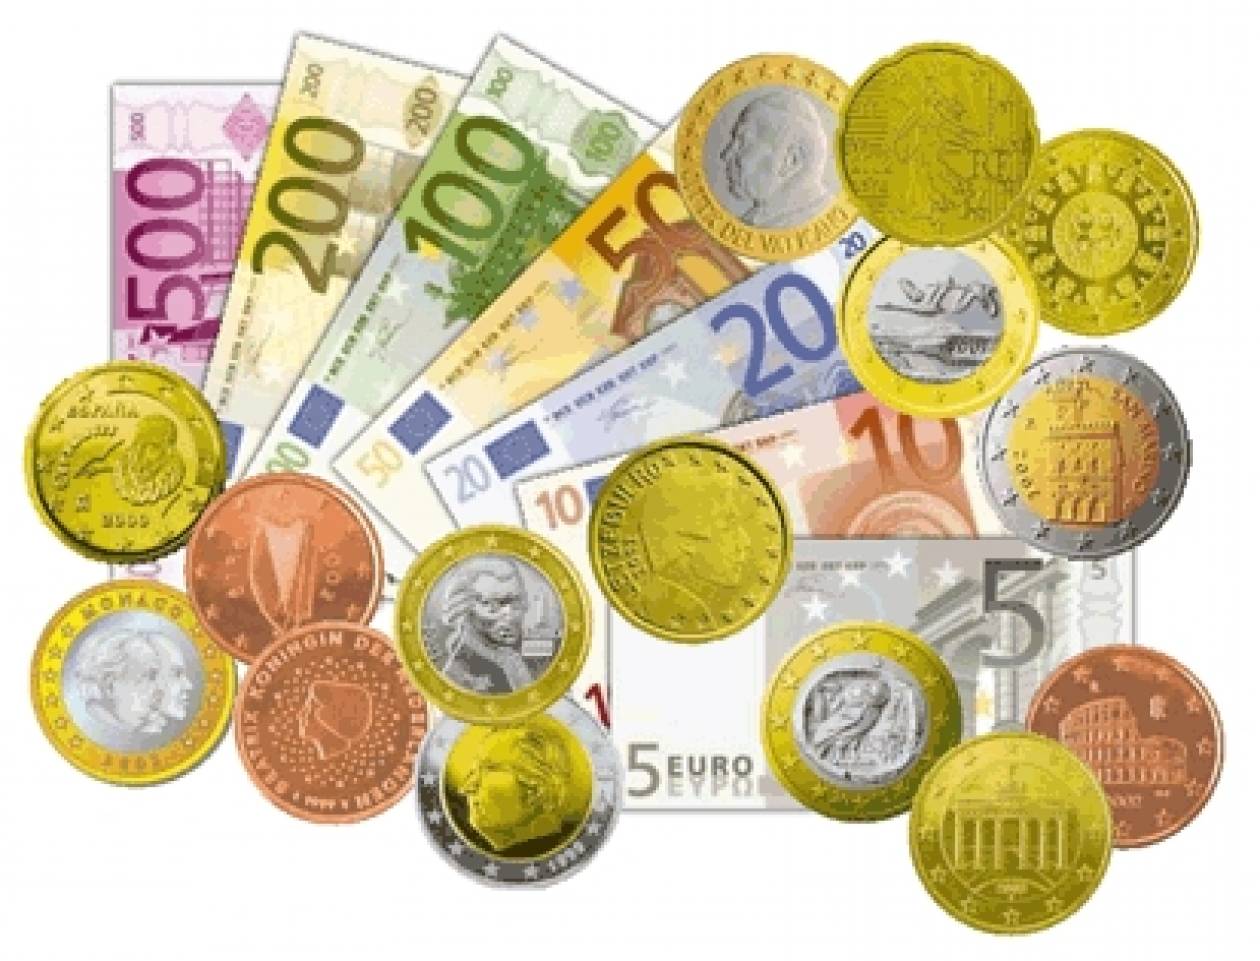 Eγκριση ΕΕ για χρηματοδότηση 3 έργων στην Ελλάδα